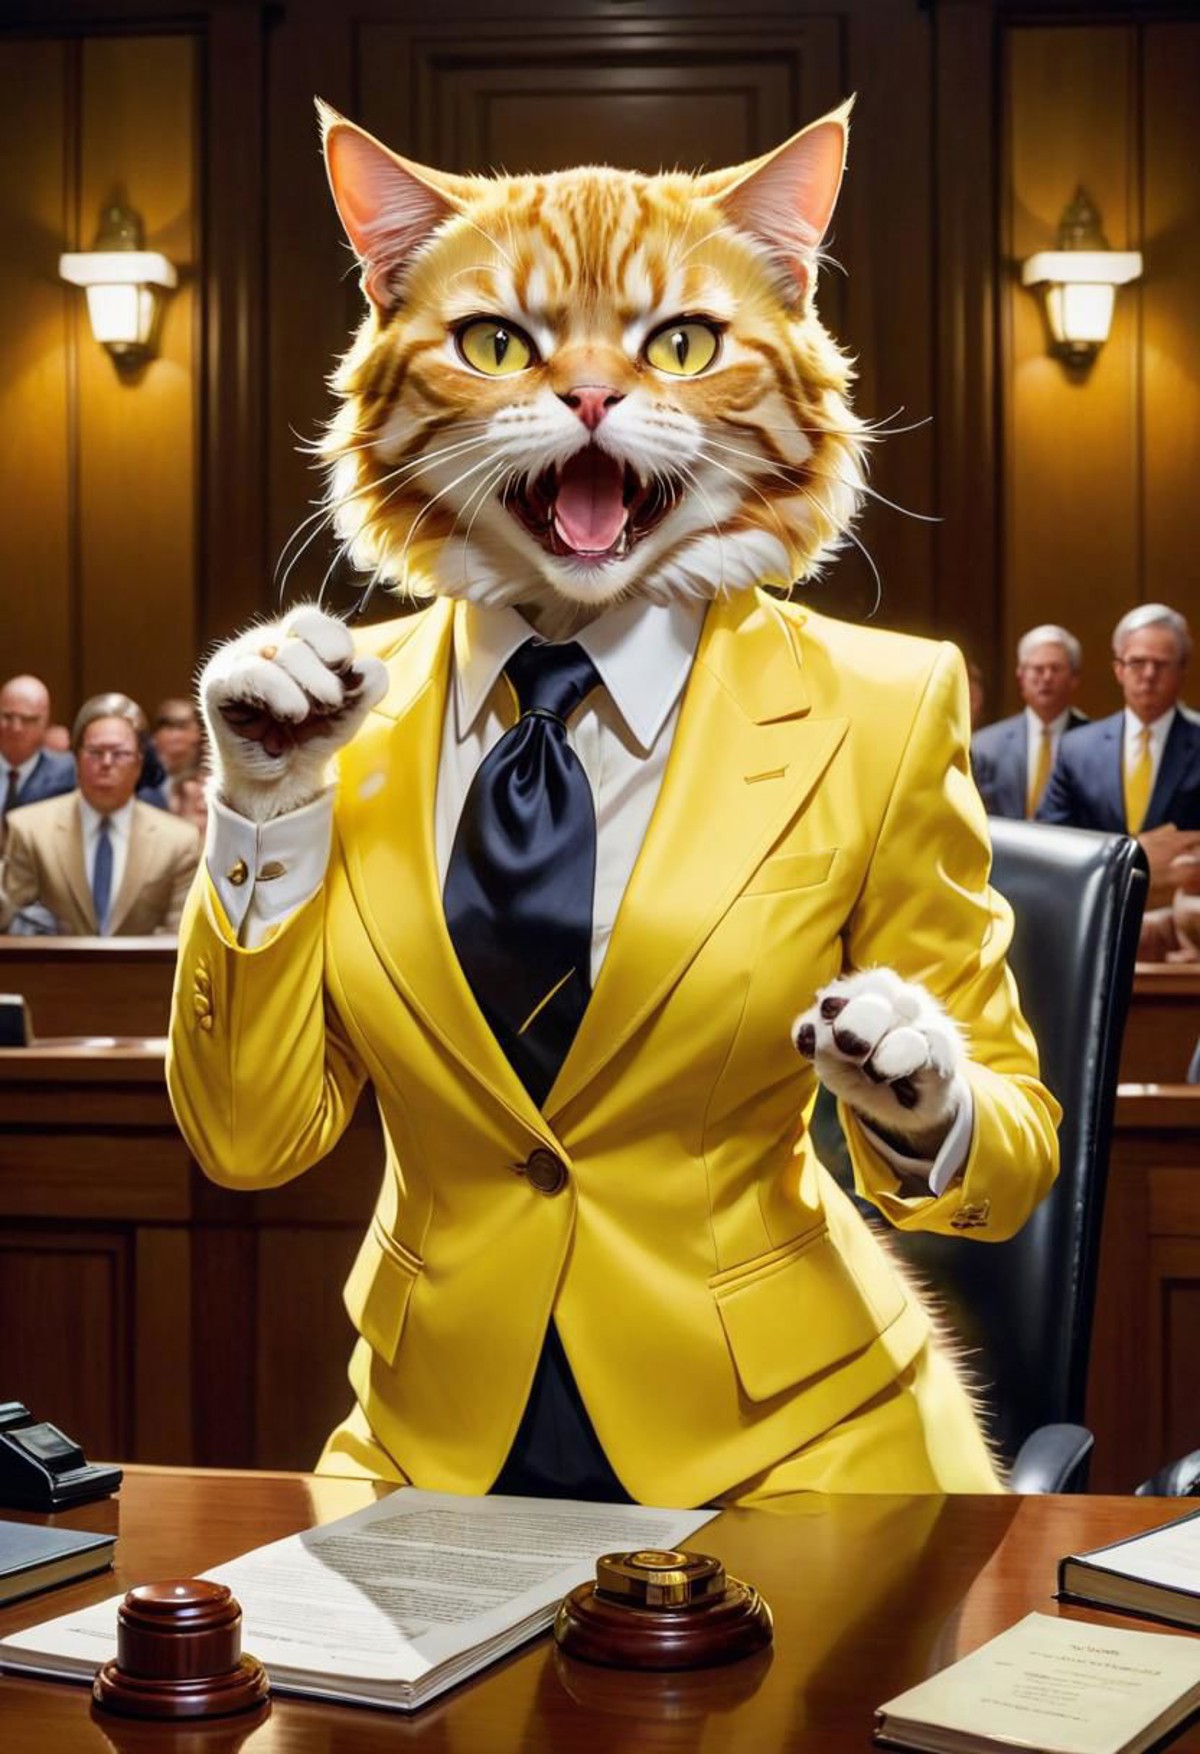 Photo of a cat lawyer dress in a yellow suit, arguing in court, art by J.C. Leyendecker, Canon 5d Mark 4, Kodak Ektar, neo...